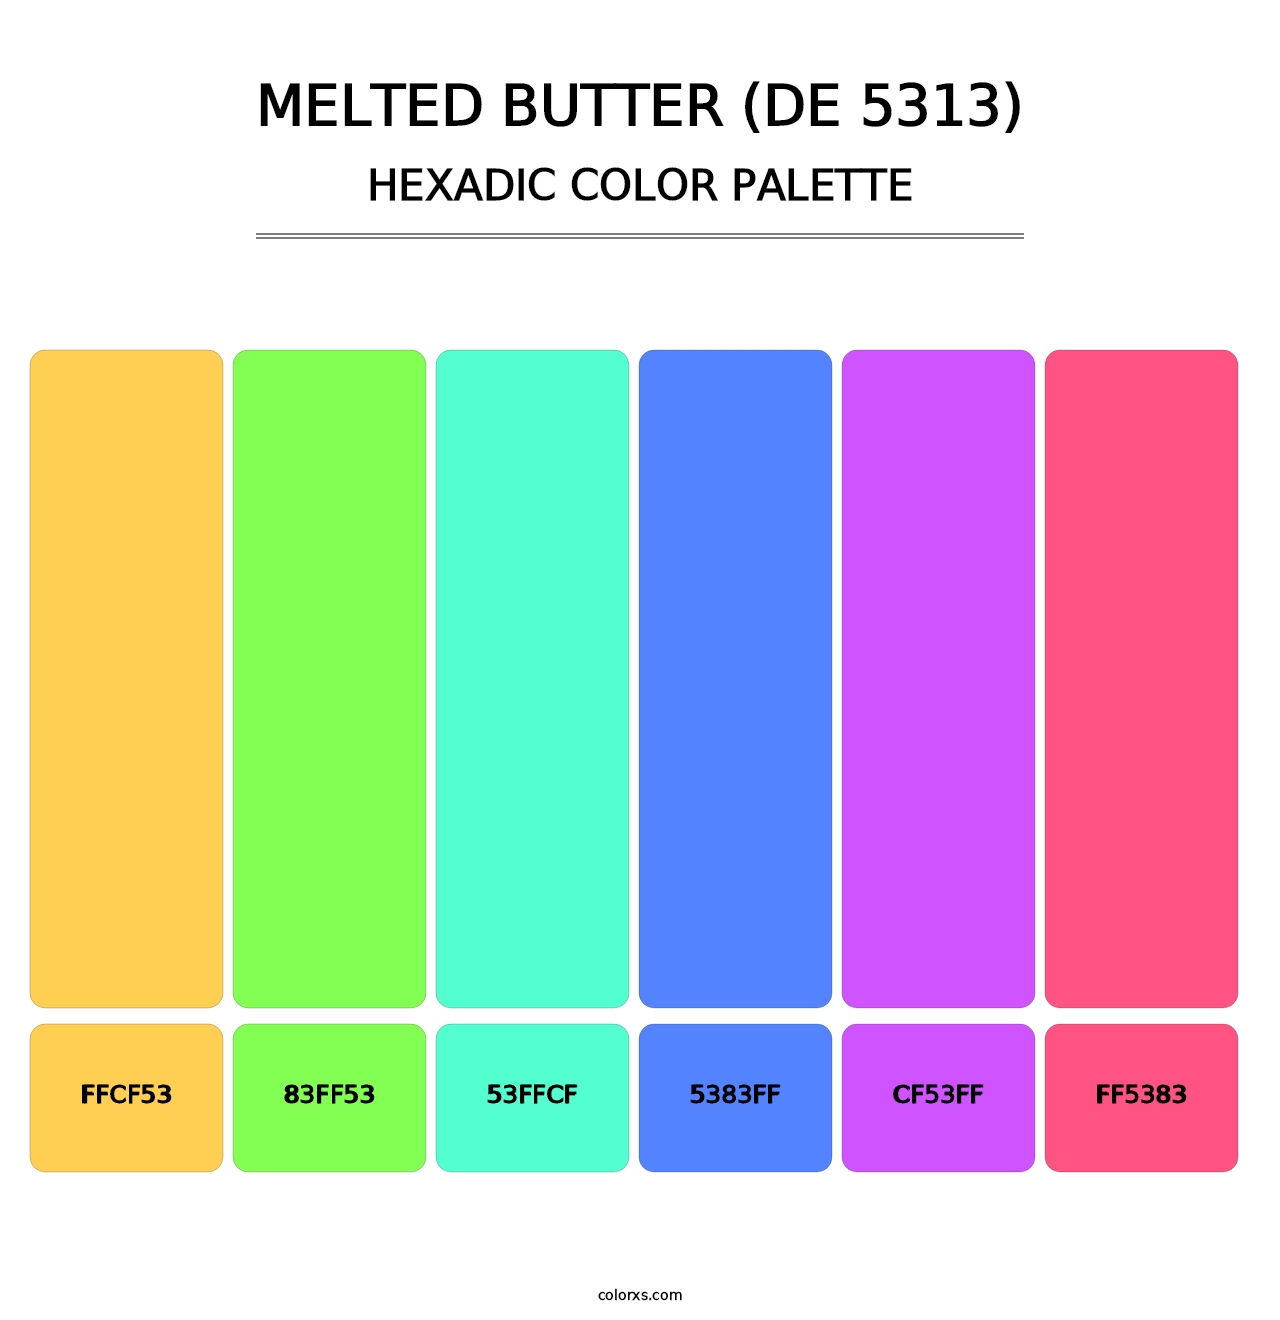 Melted Butter (DE 5313) - Hexadic Color Palette